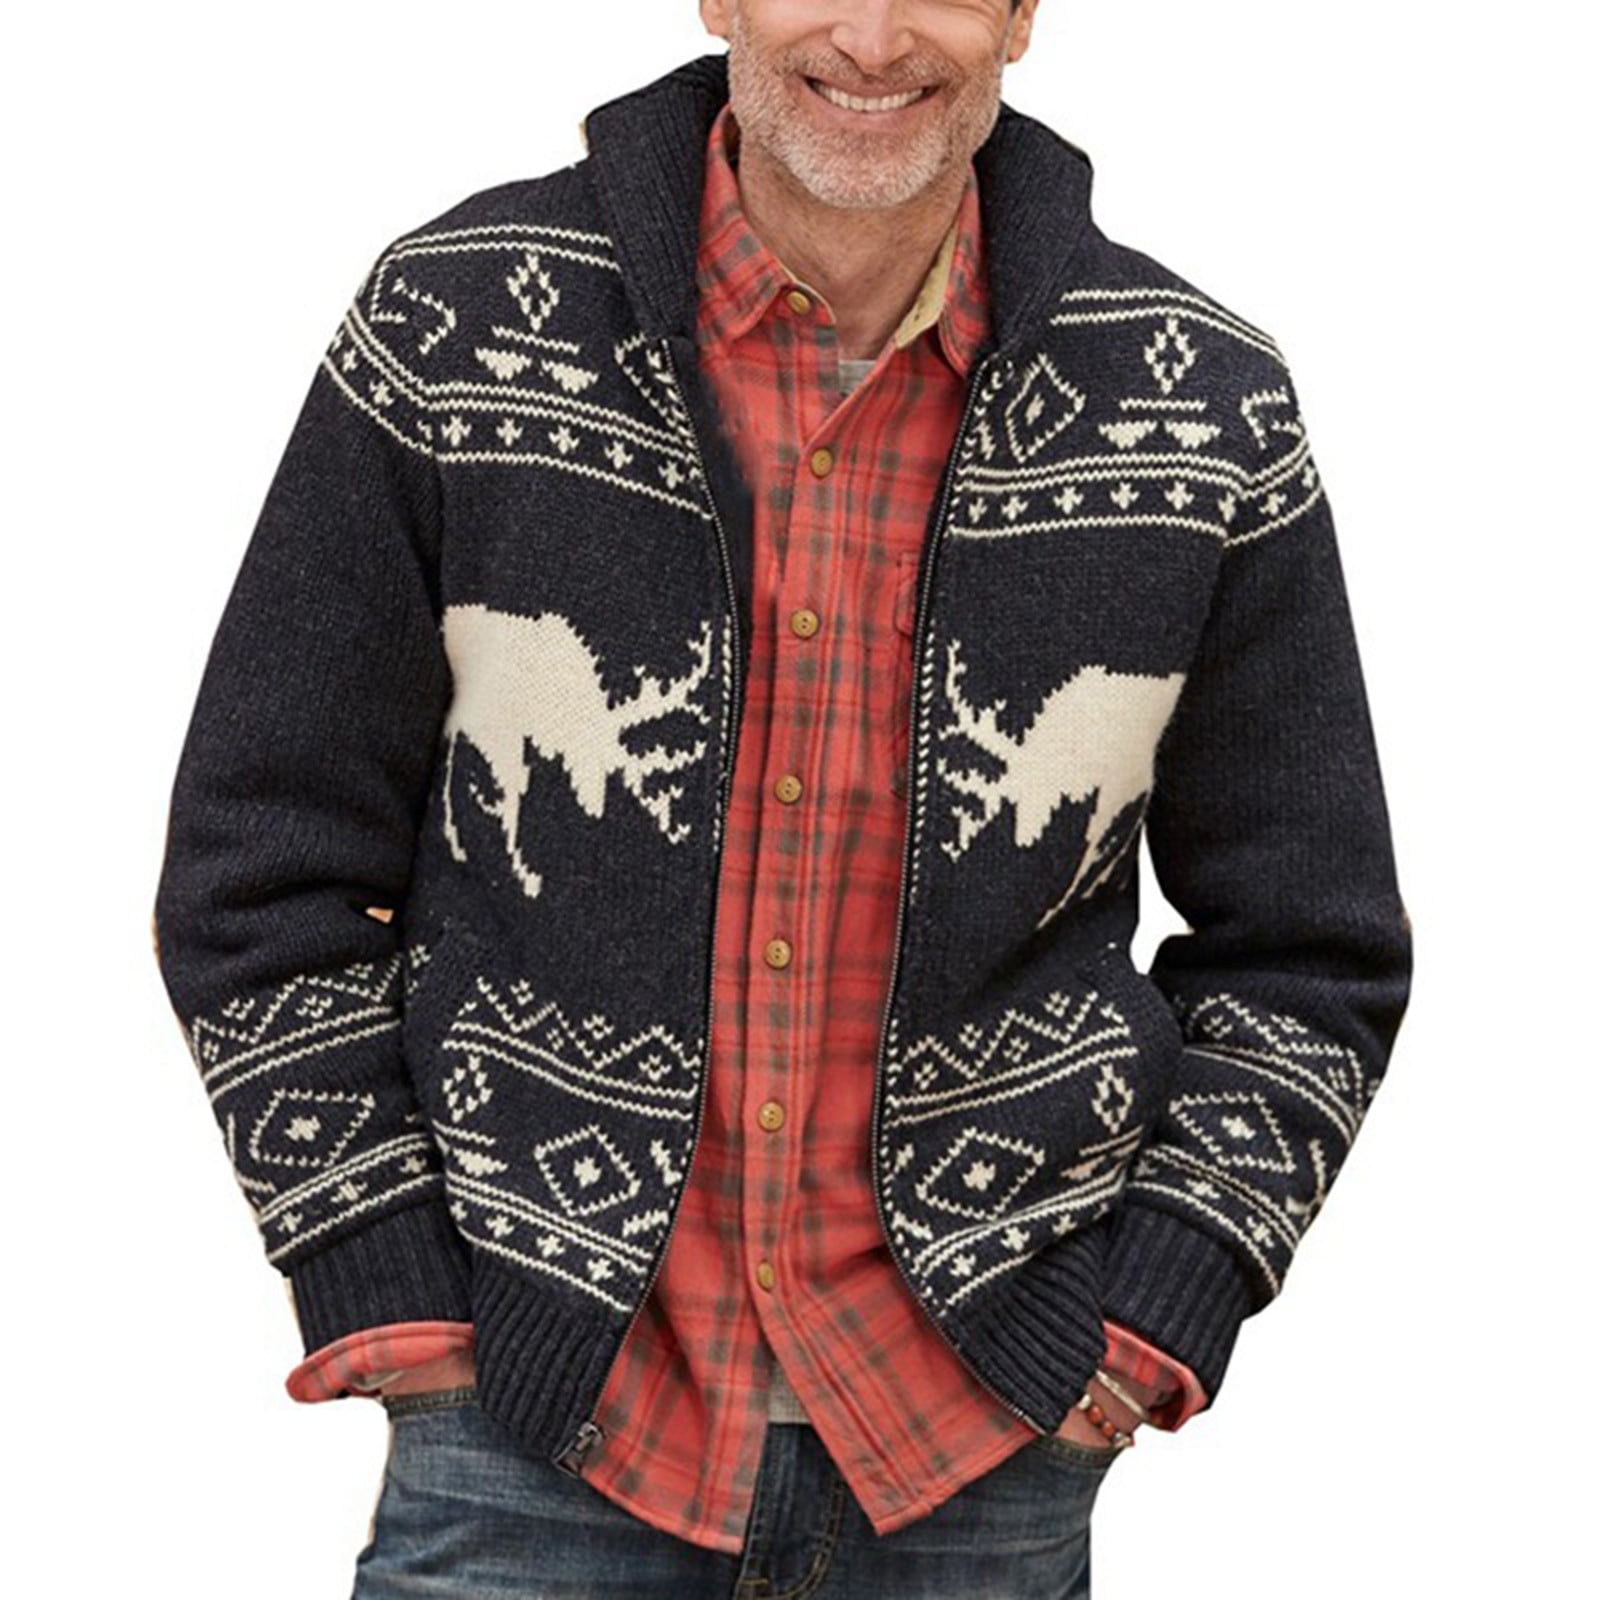 Fesfesfes Men's Fall/Winter Sweater Jacket Loose Large Size Sweater  Cardigan Vintage Pattern Jacket Sale Tops on Clearance 